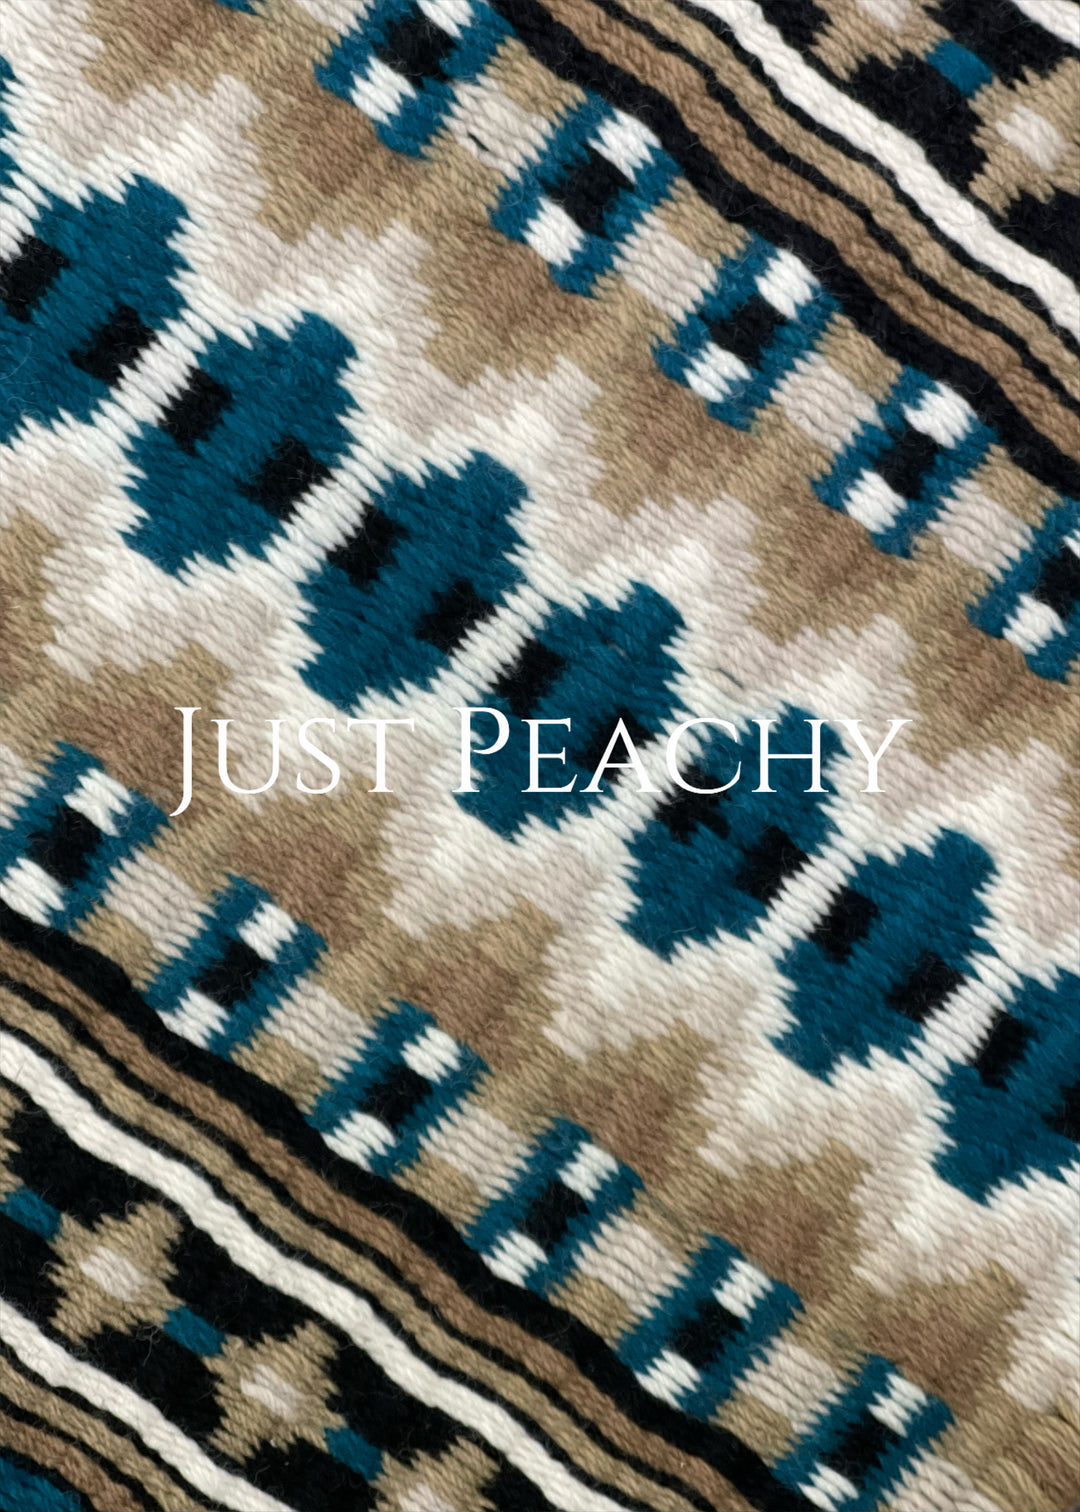 Just Peachy Premier Western Show Blanket ~ The 2.0 Kaycee #982